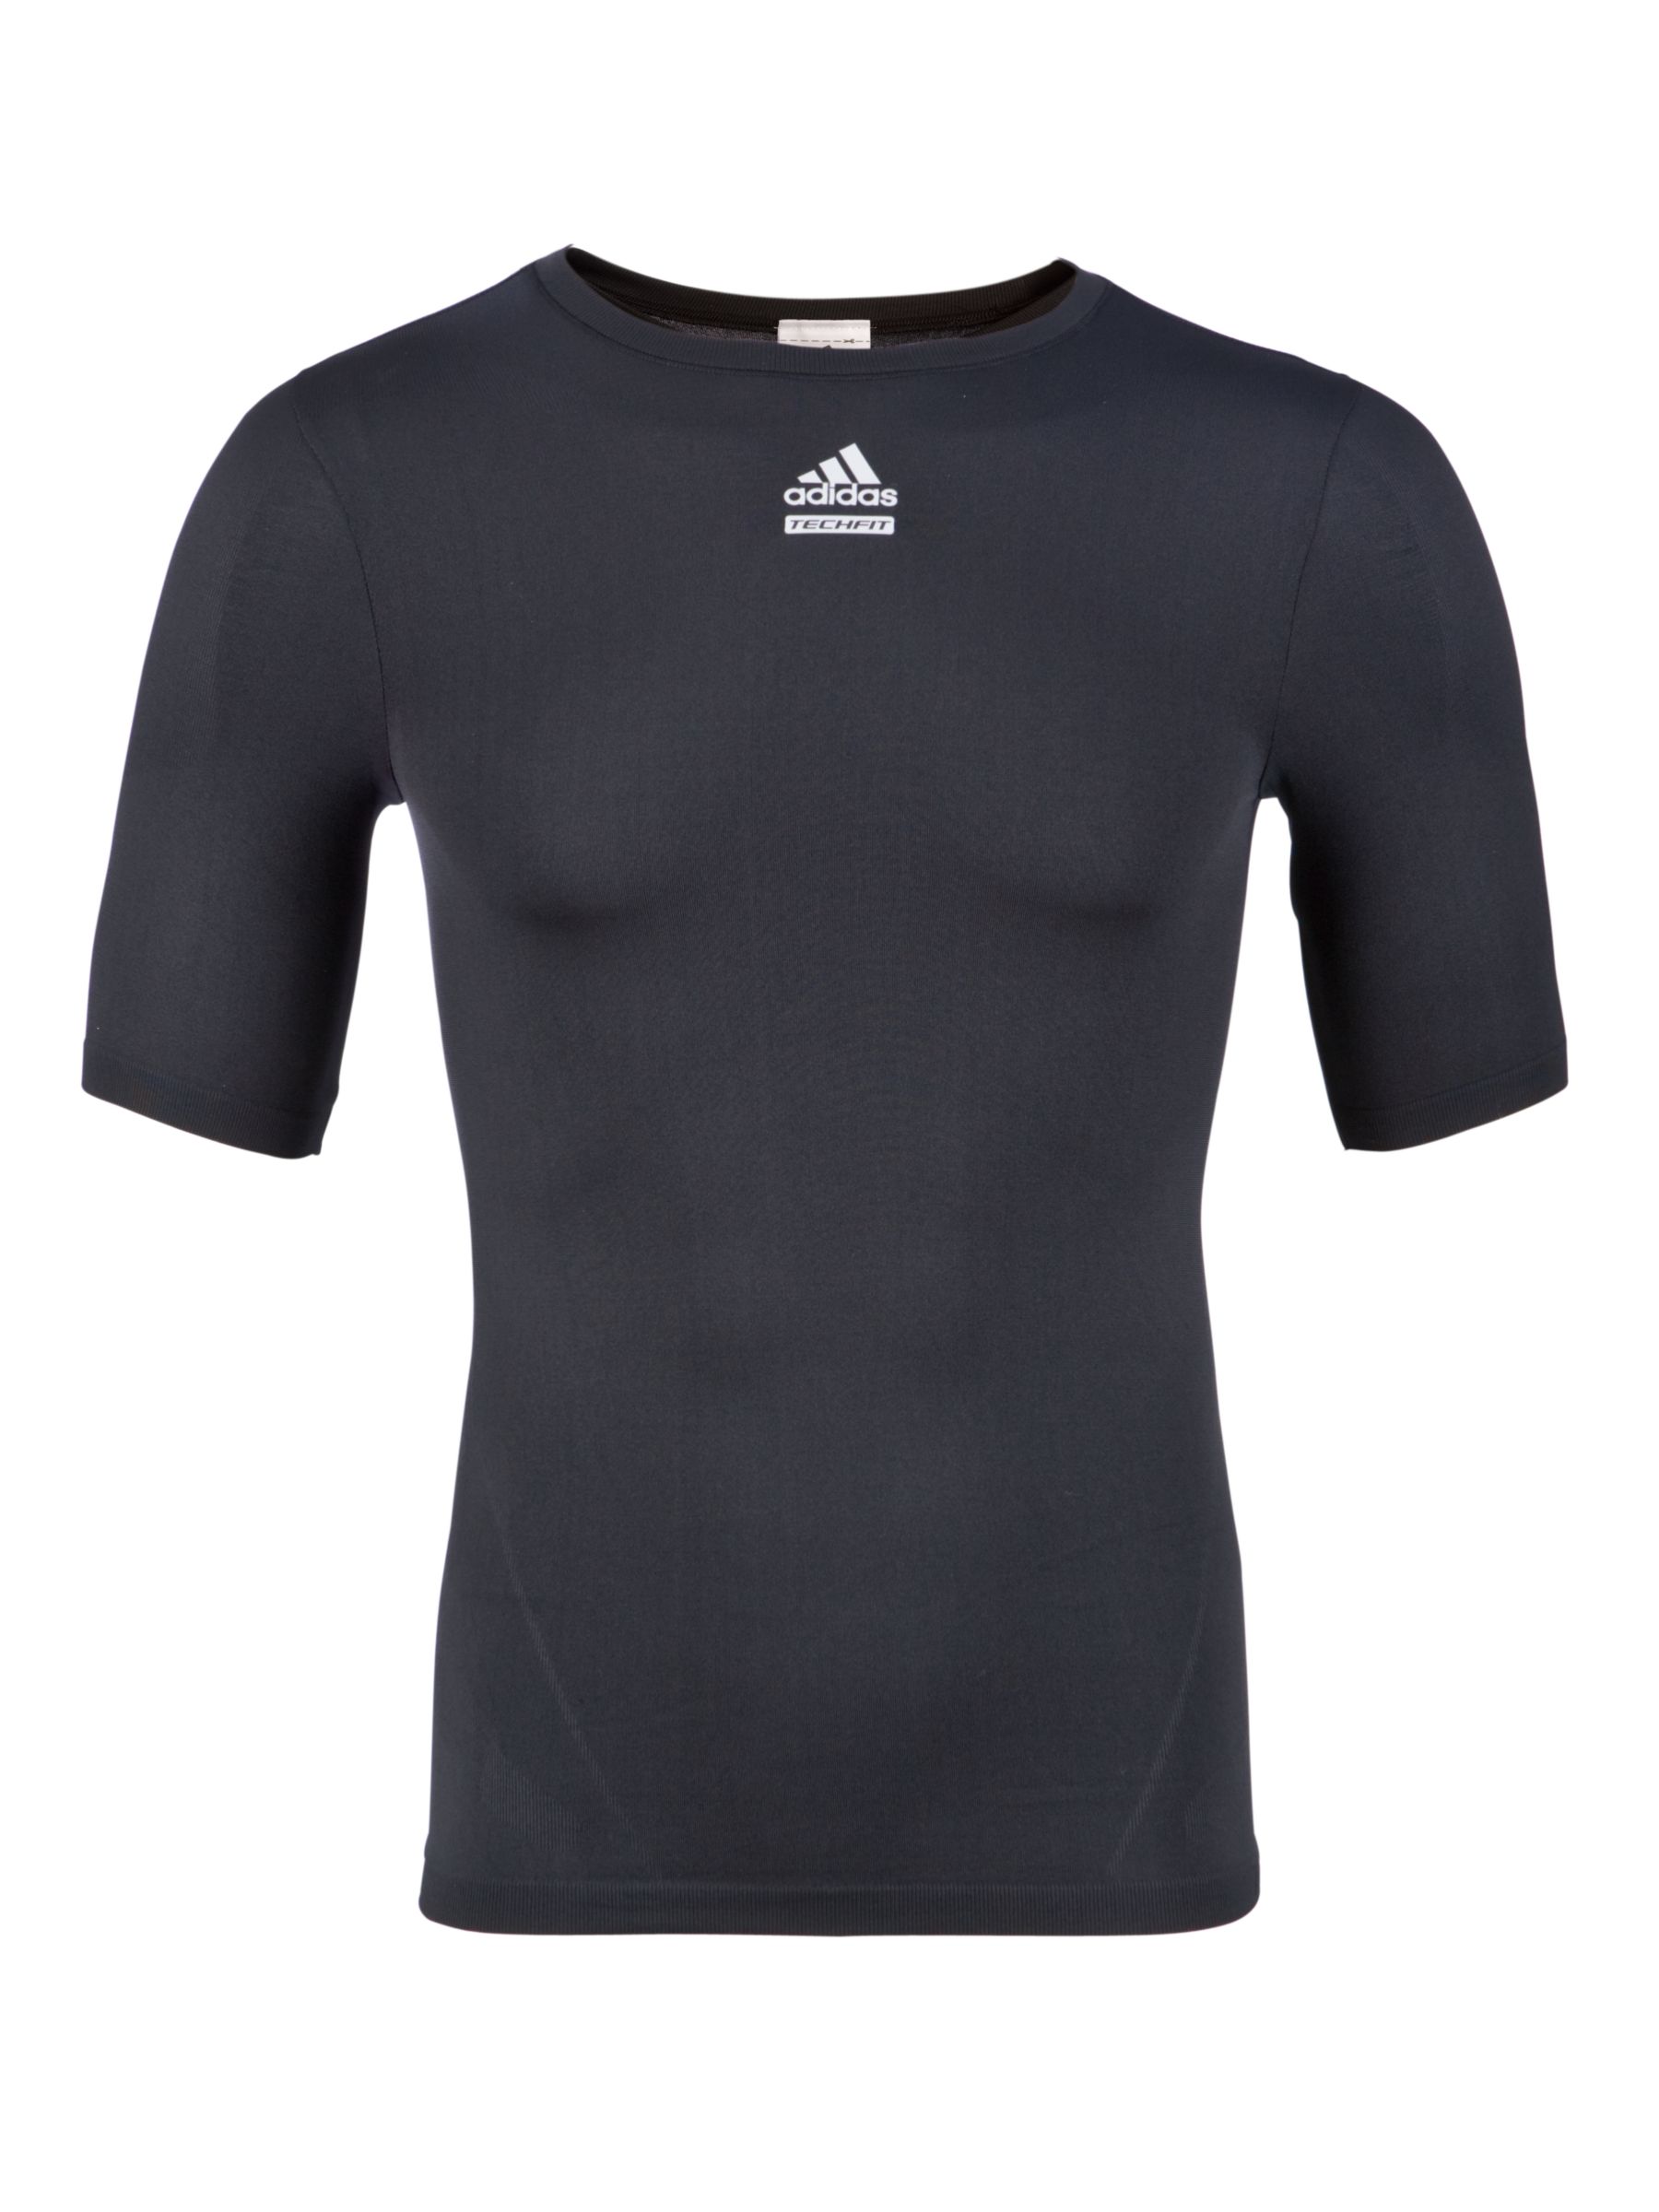 Adidas Techfit Short Sleeve T-Shirt, Black